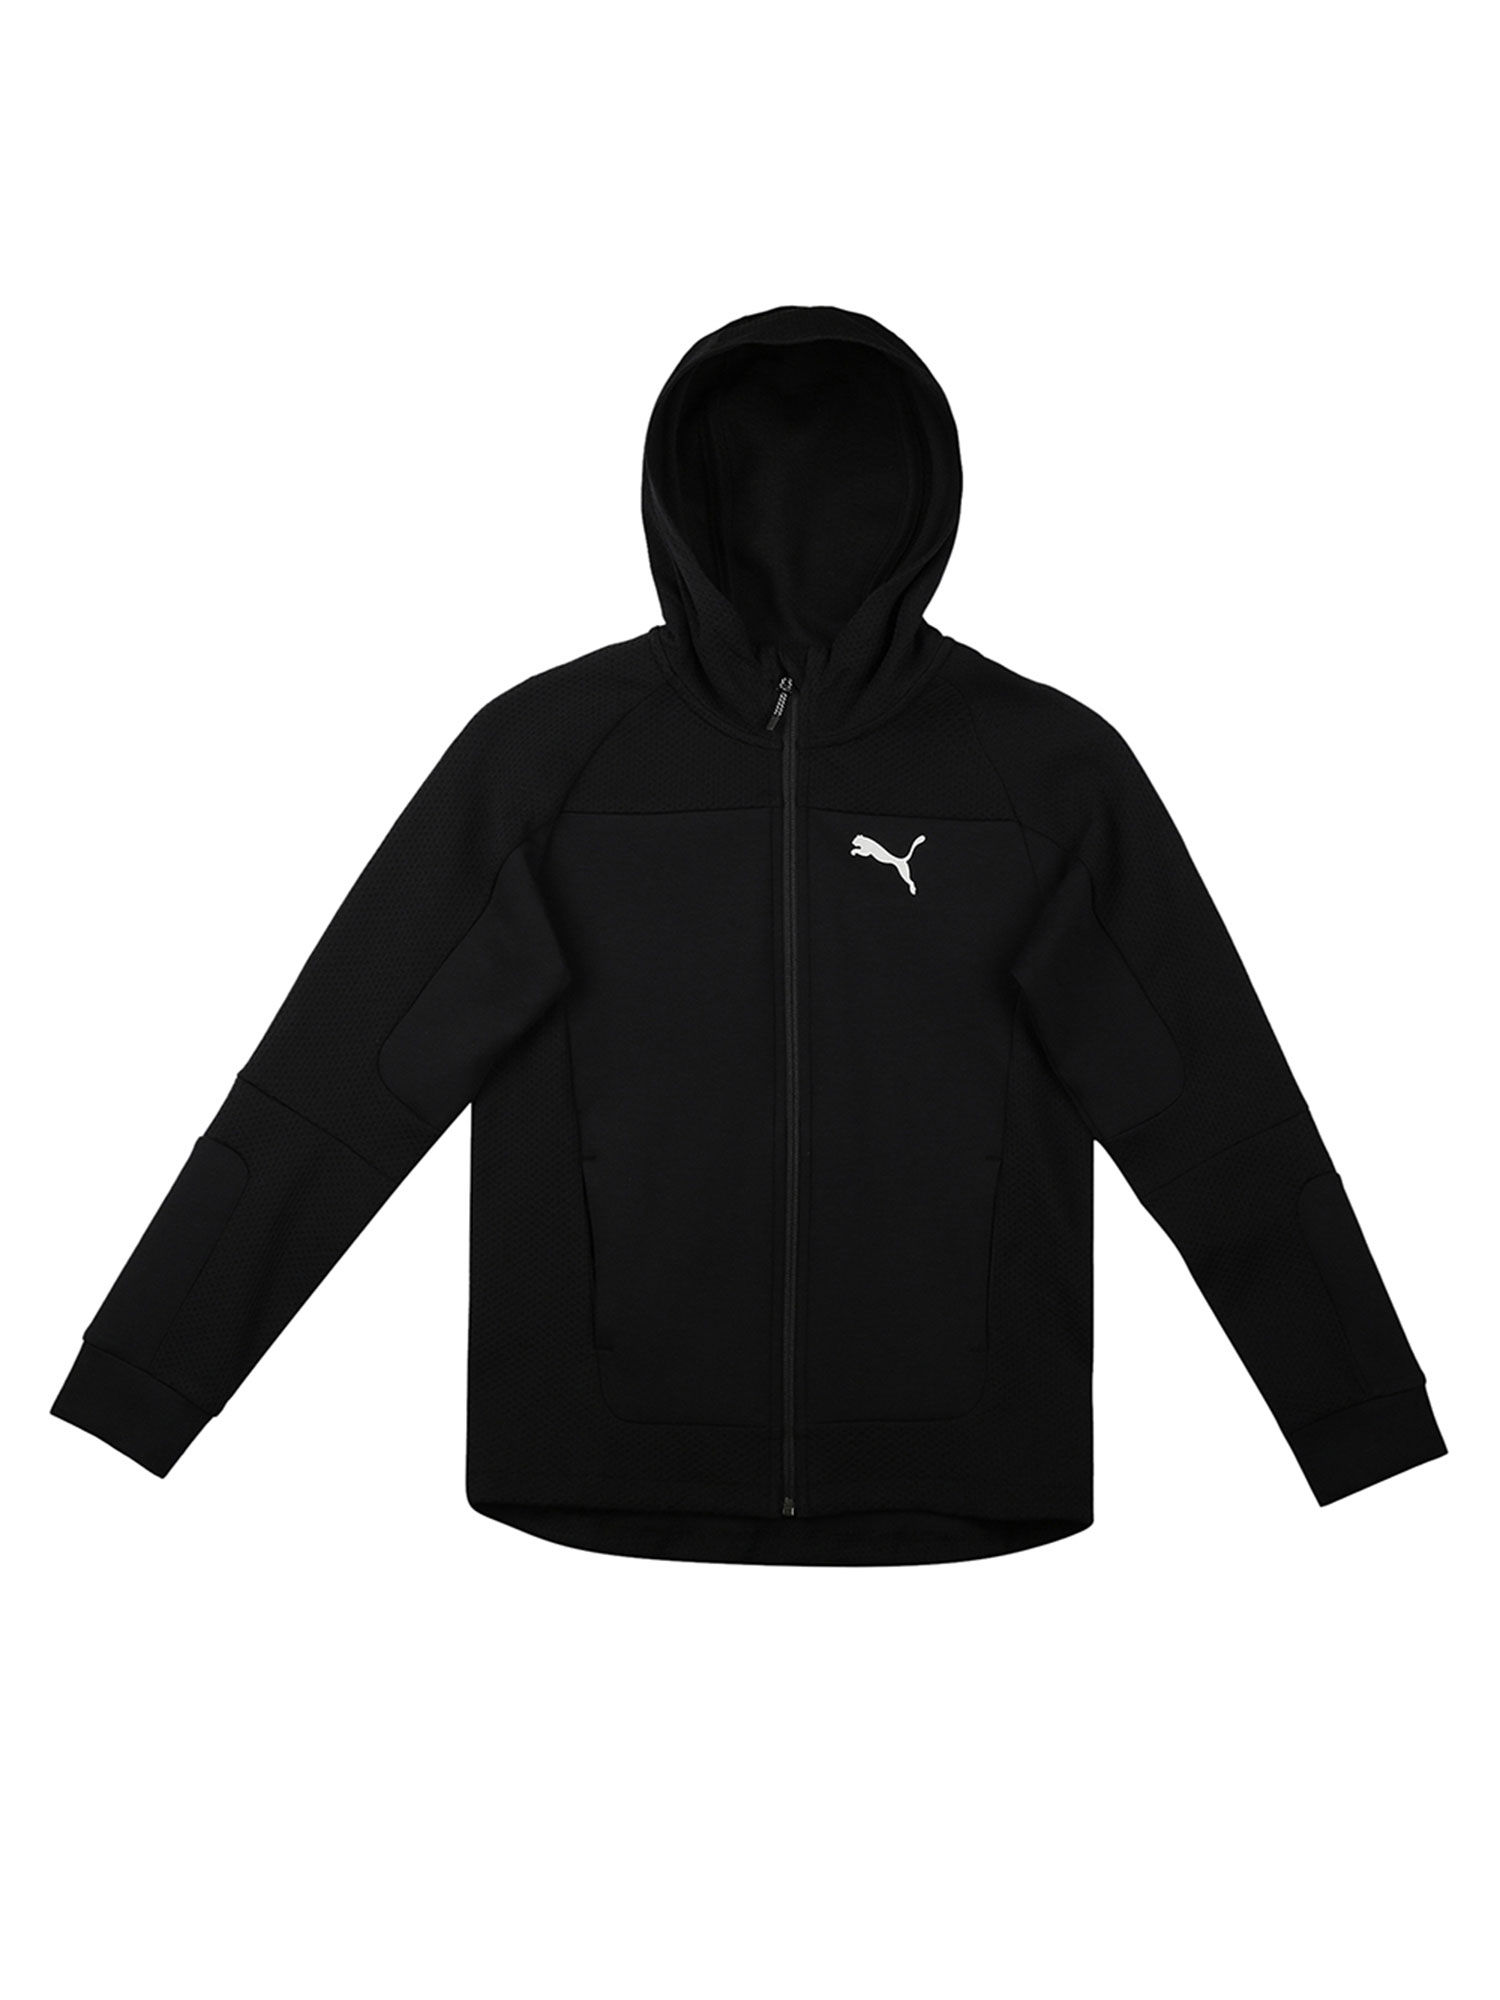 Puma Evostripe Hooded Jacket B - Black (7-8 Years): Buy Puma Evostripe ...